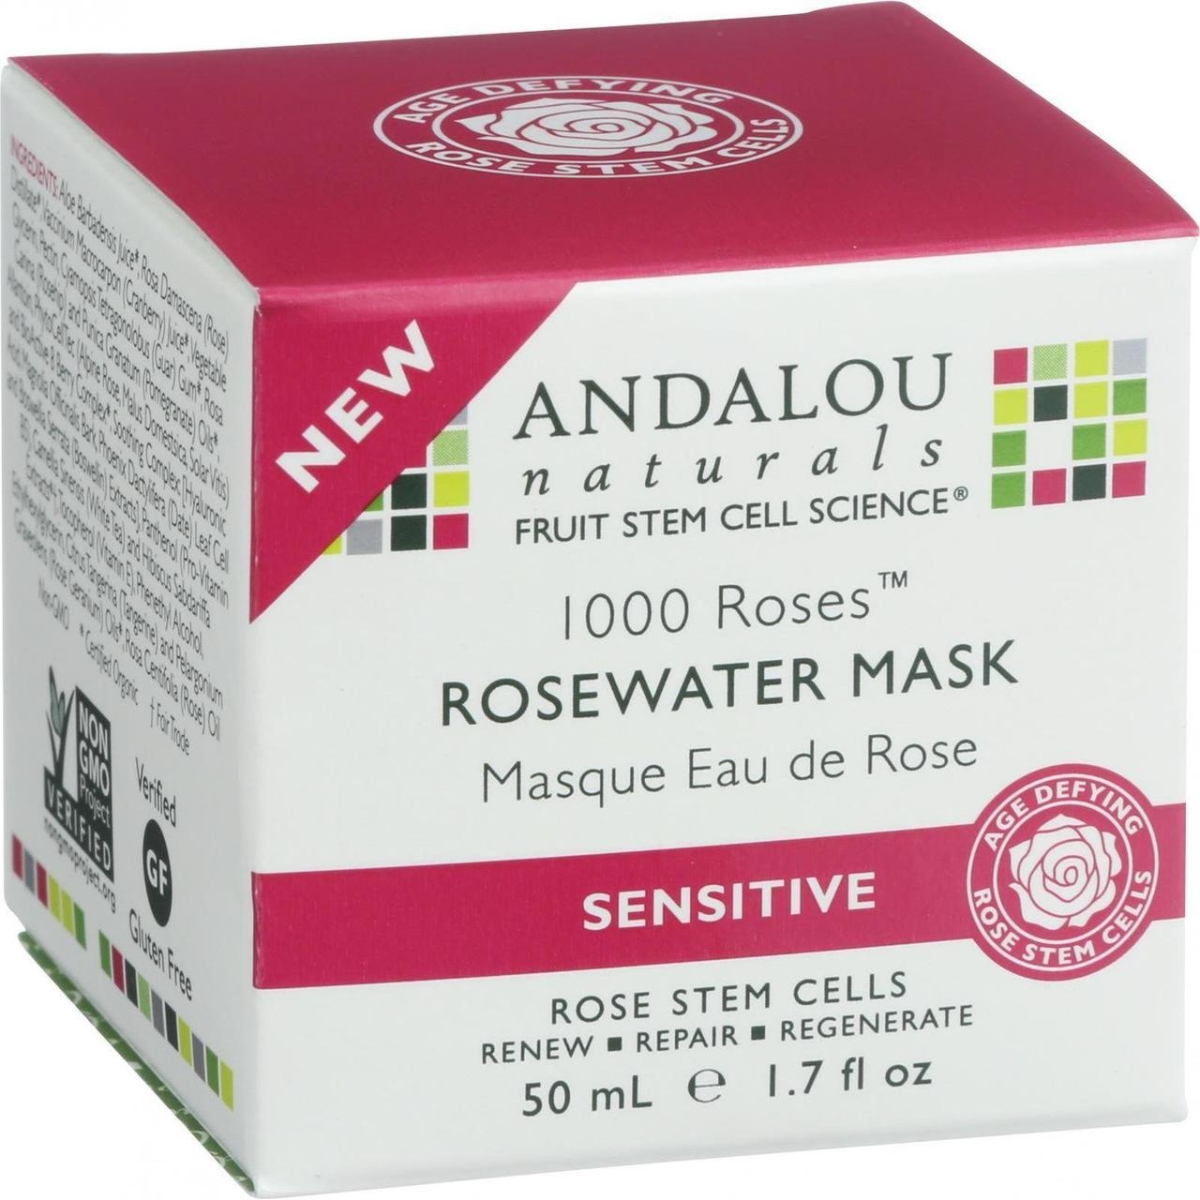 Hg1548296 1.7 Oz Rosewater Mask, 1000 Roses